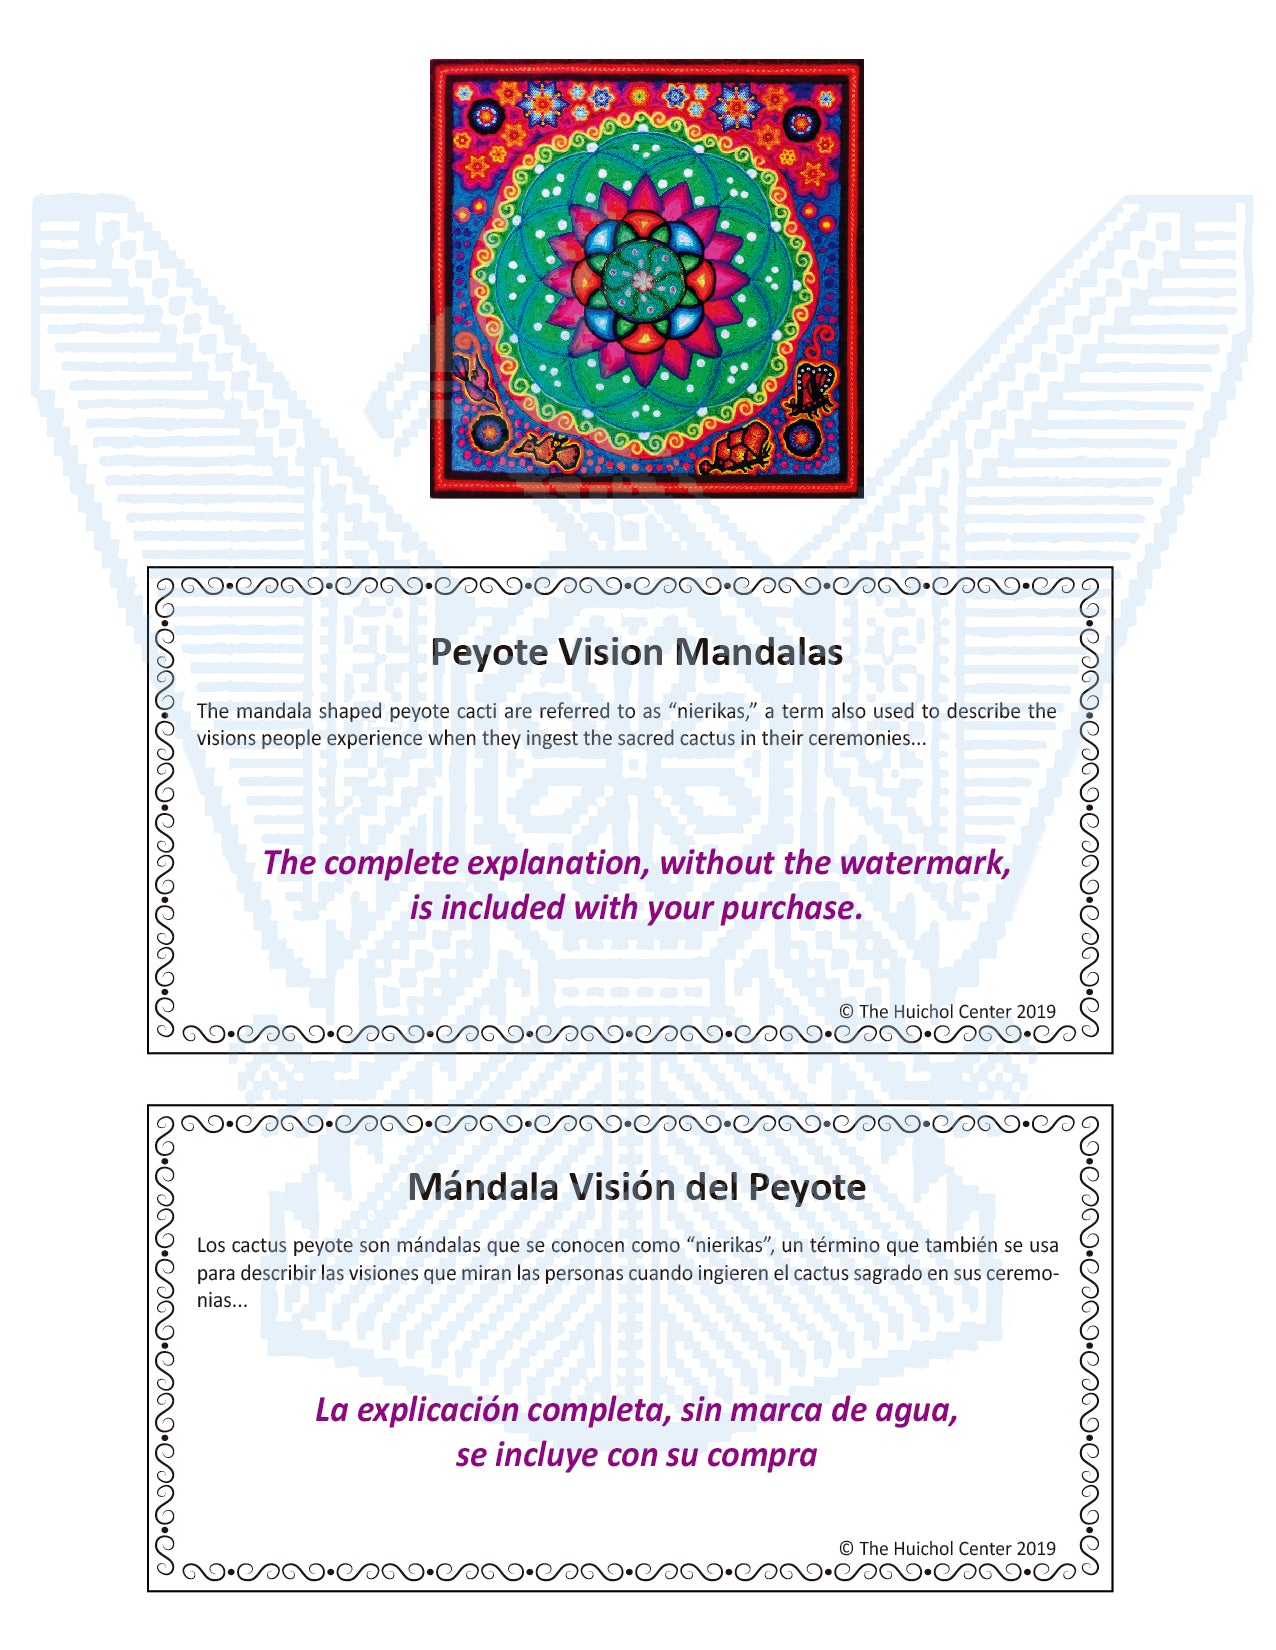 Peyote Vision Mandalas